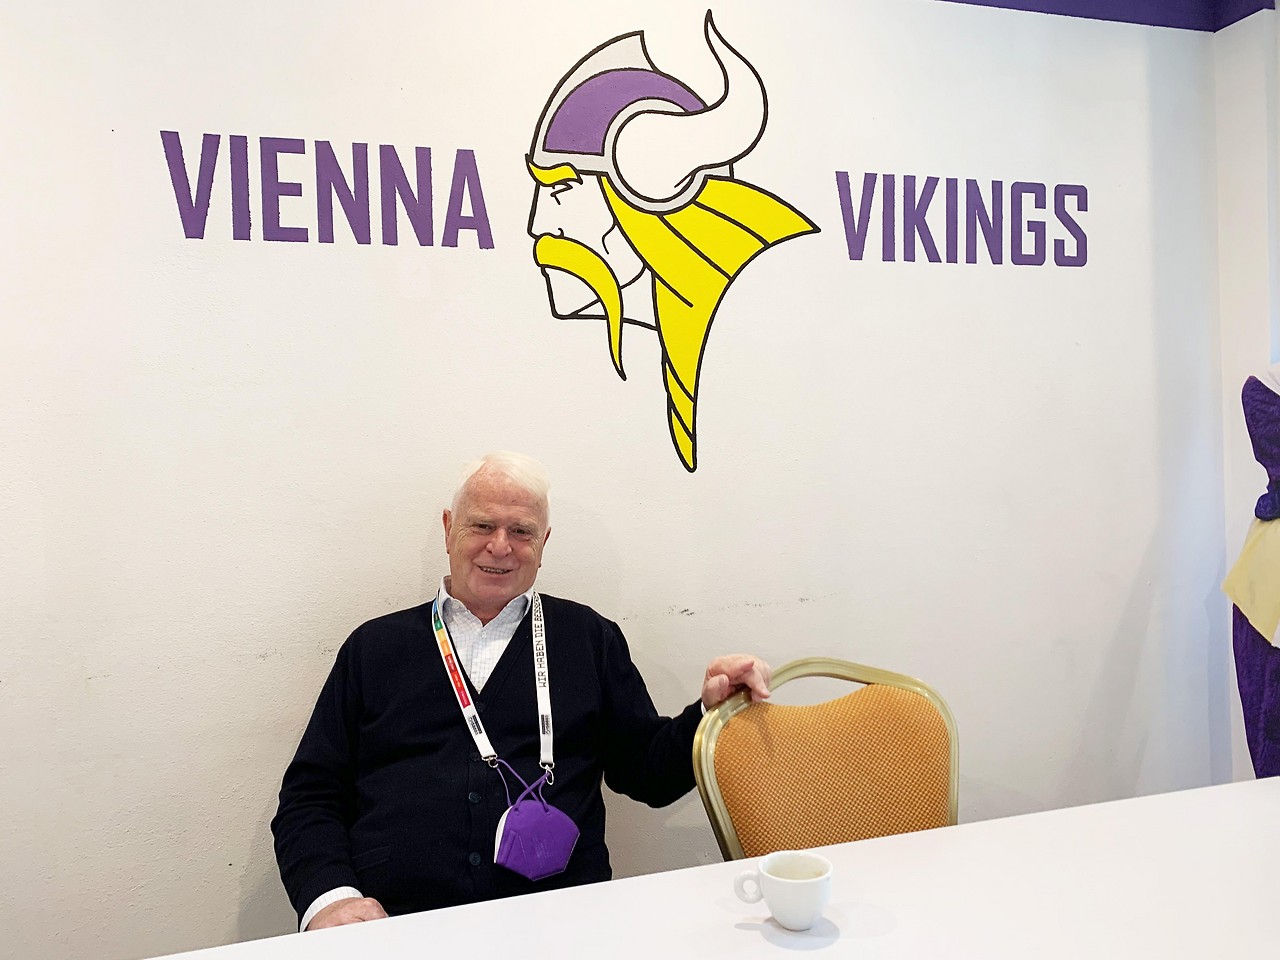 Karl Wurm, President of the Vikings in Vienna